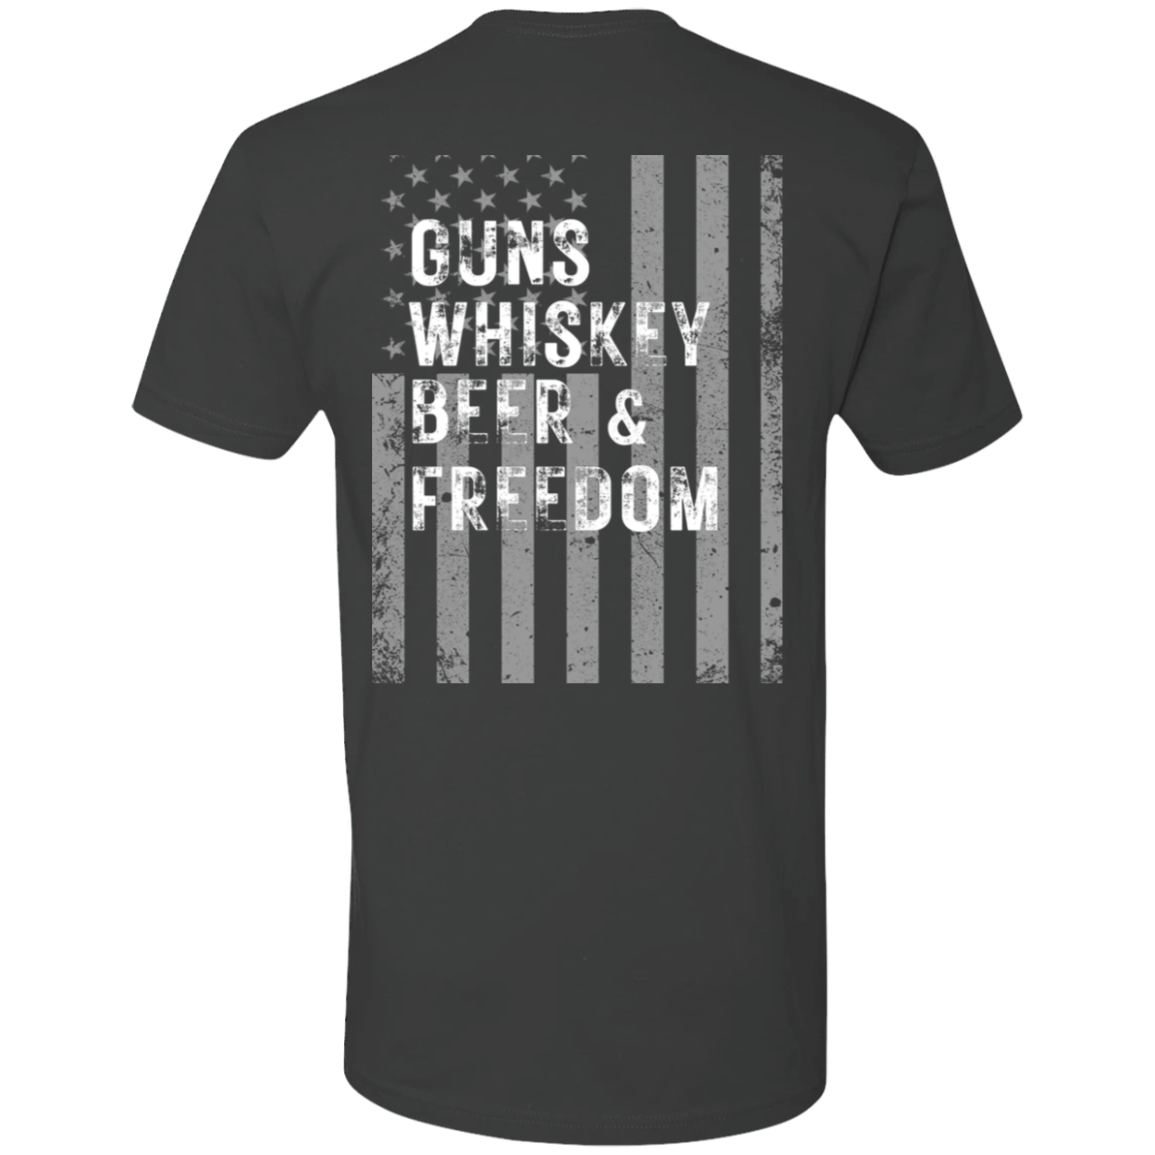 Guns Whiskey Beer & Freedom T-shirt